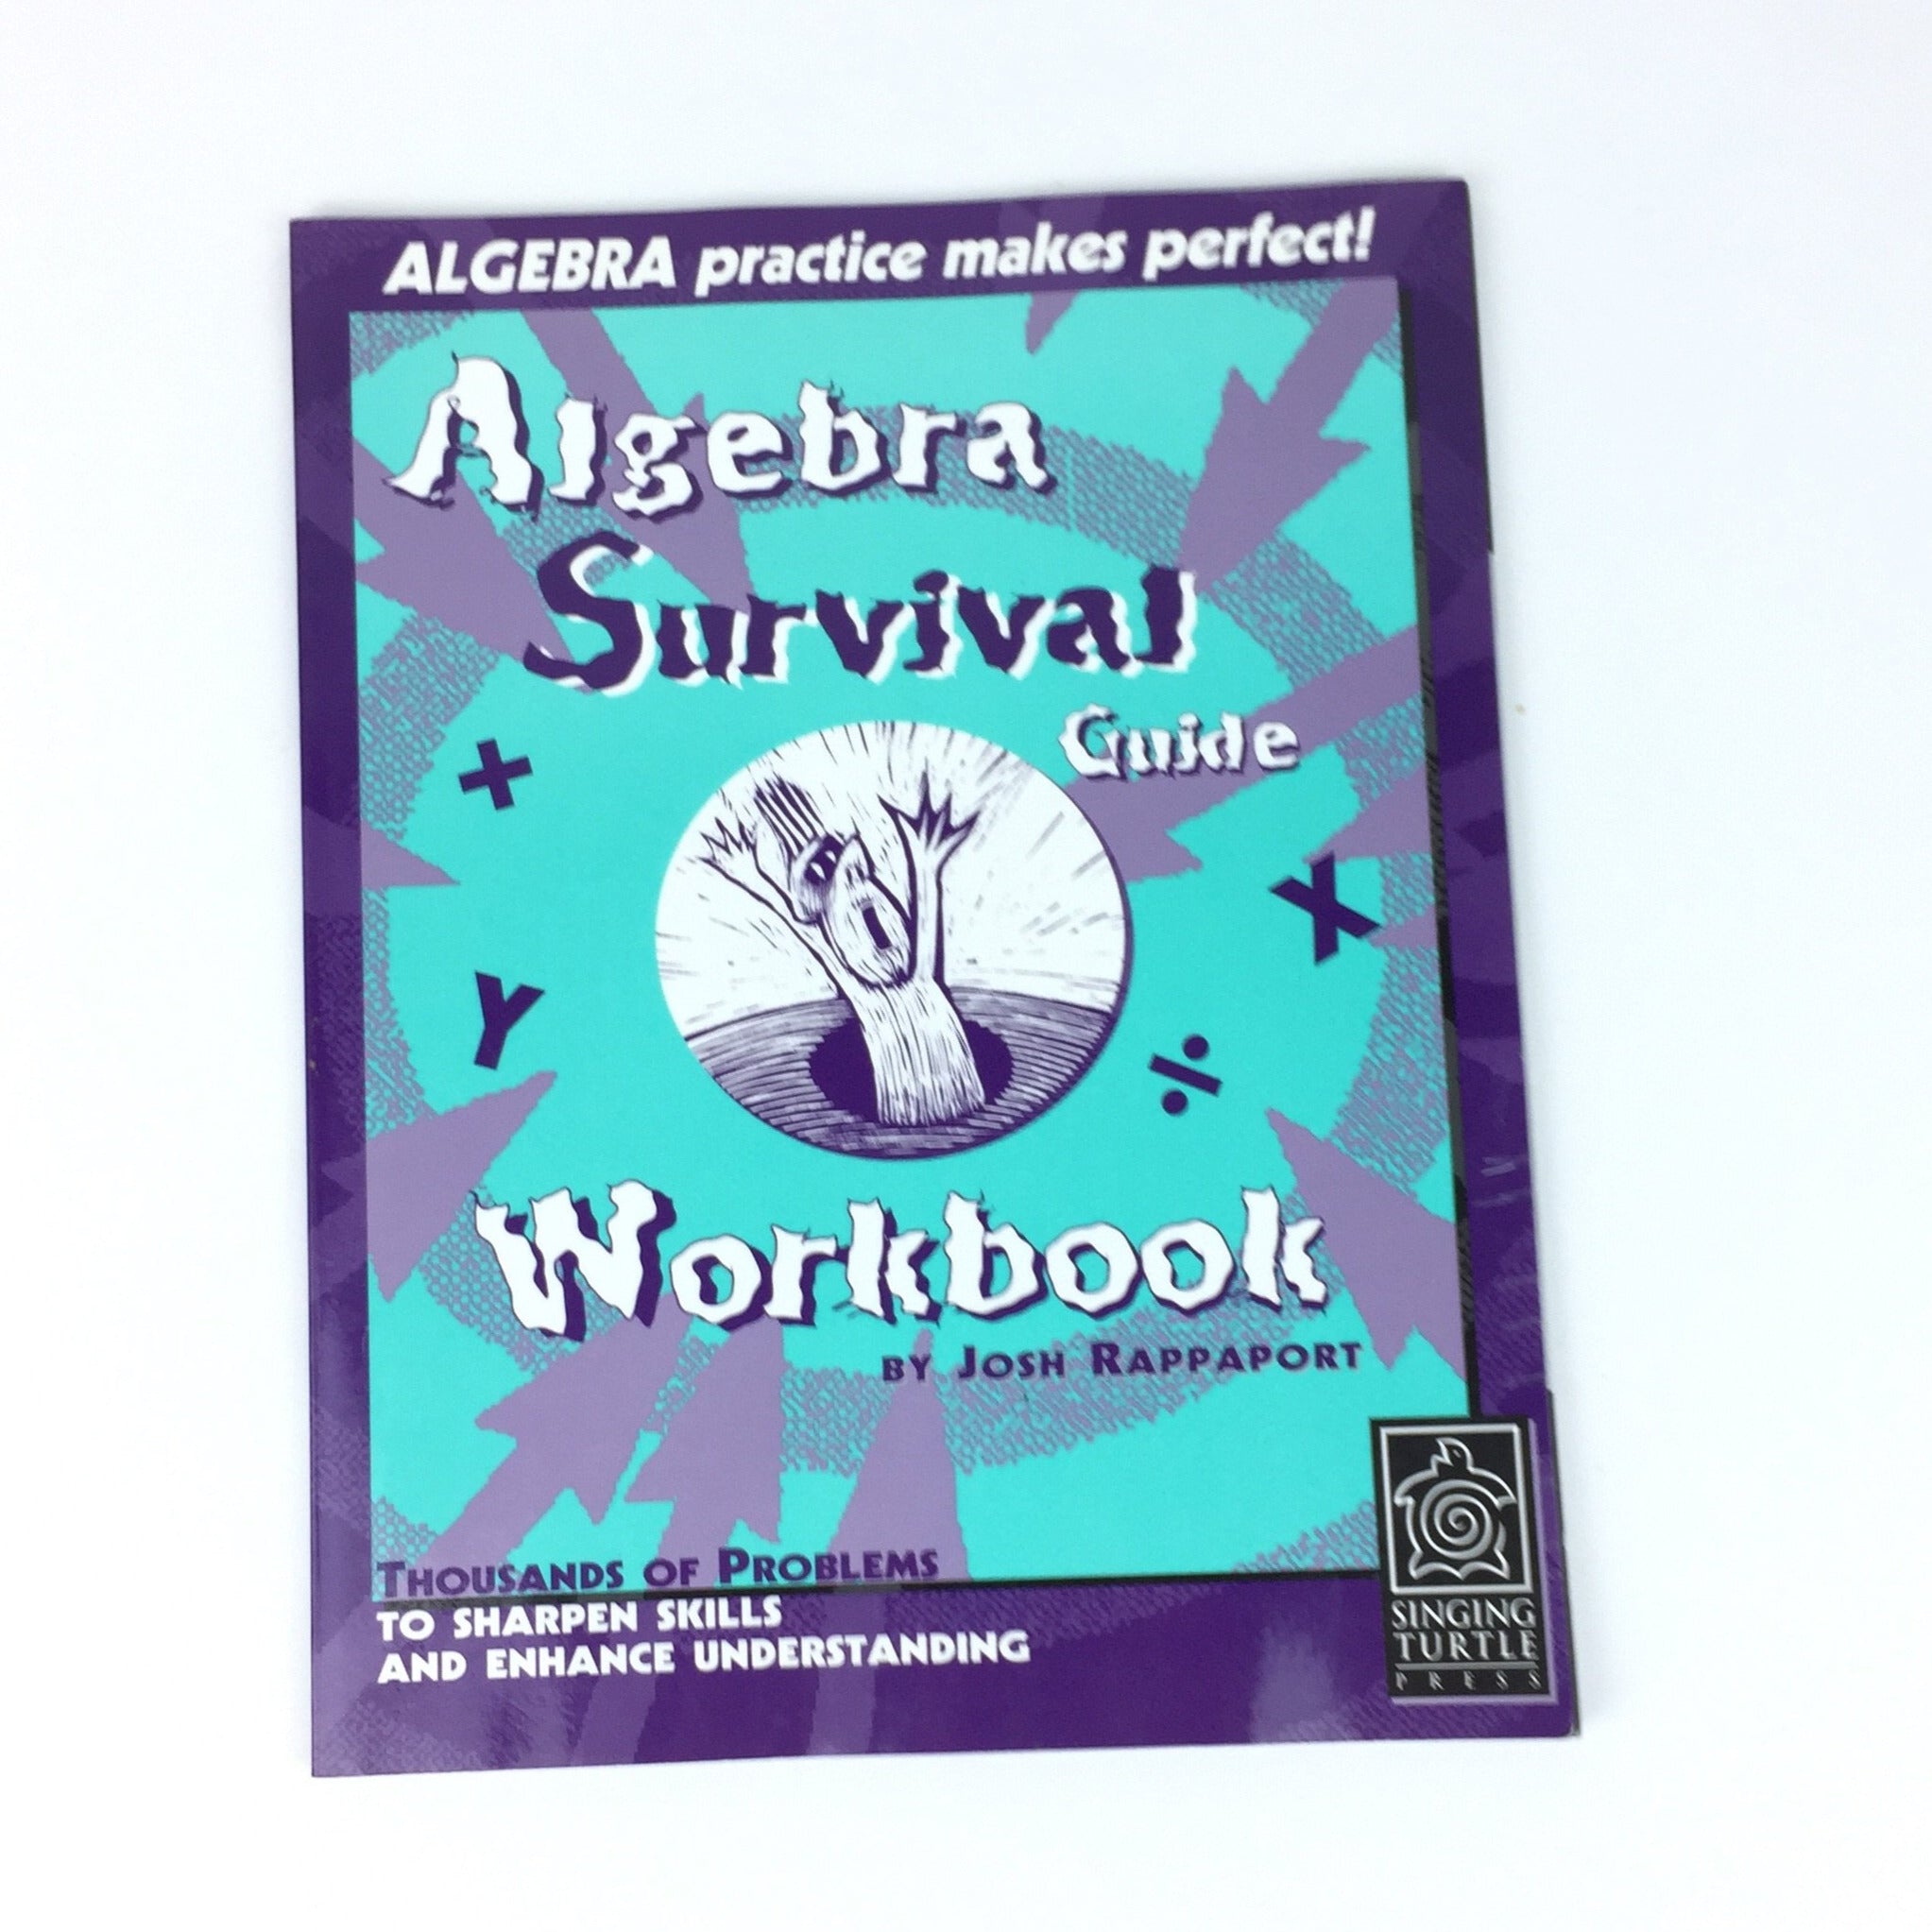 Algebra Survival Guide Workbook by Josh Rappaport